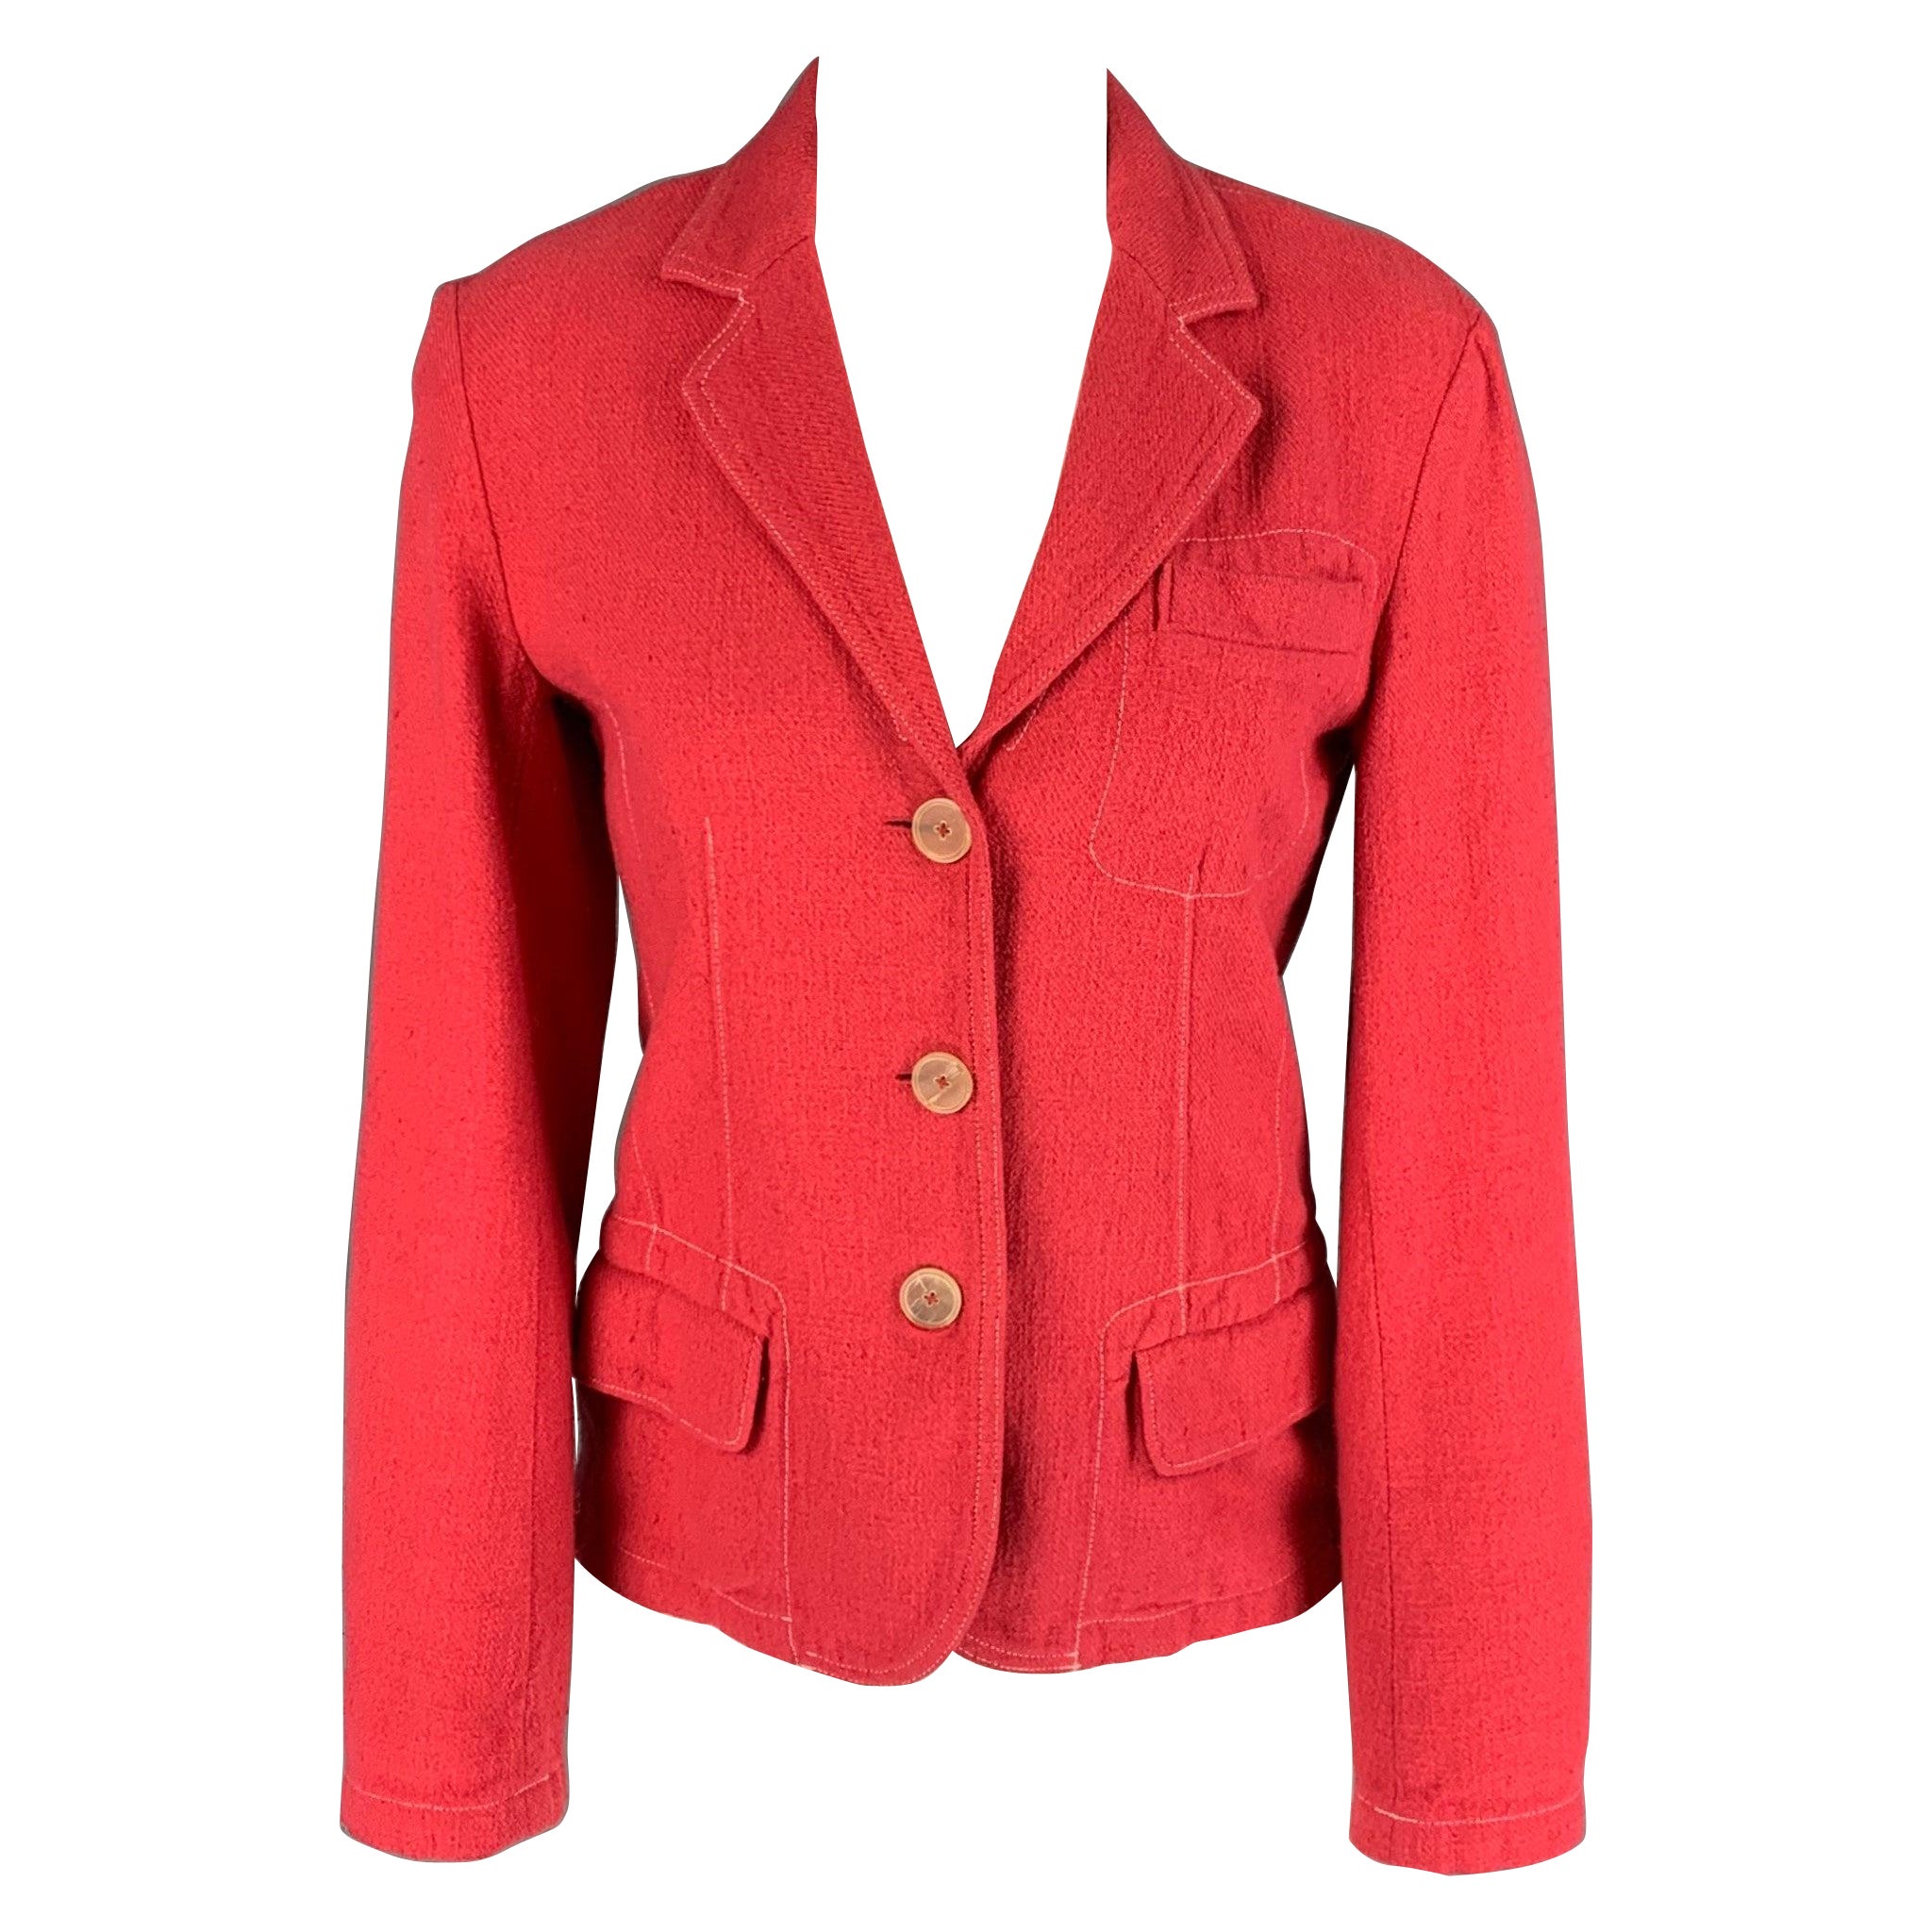 JIL SANDER Size 4 Coral Cotton Linen Jacket Blazer For Sale